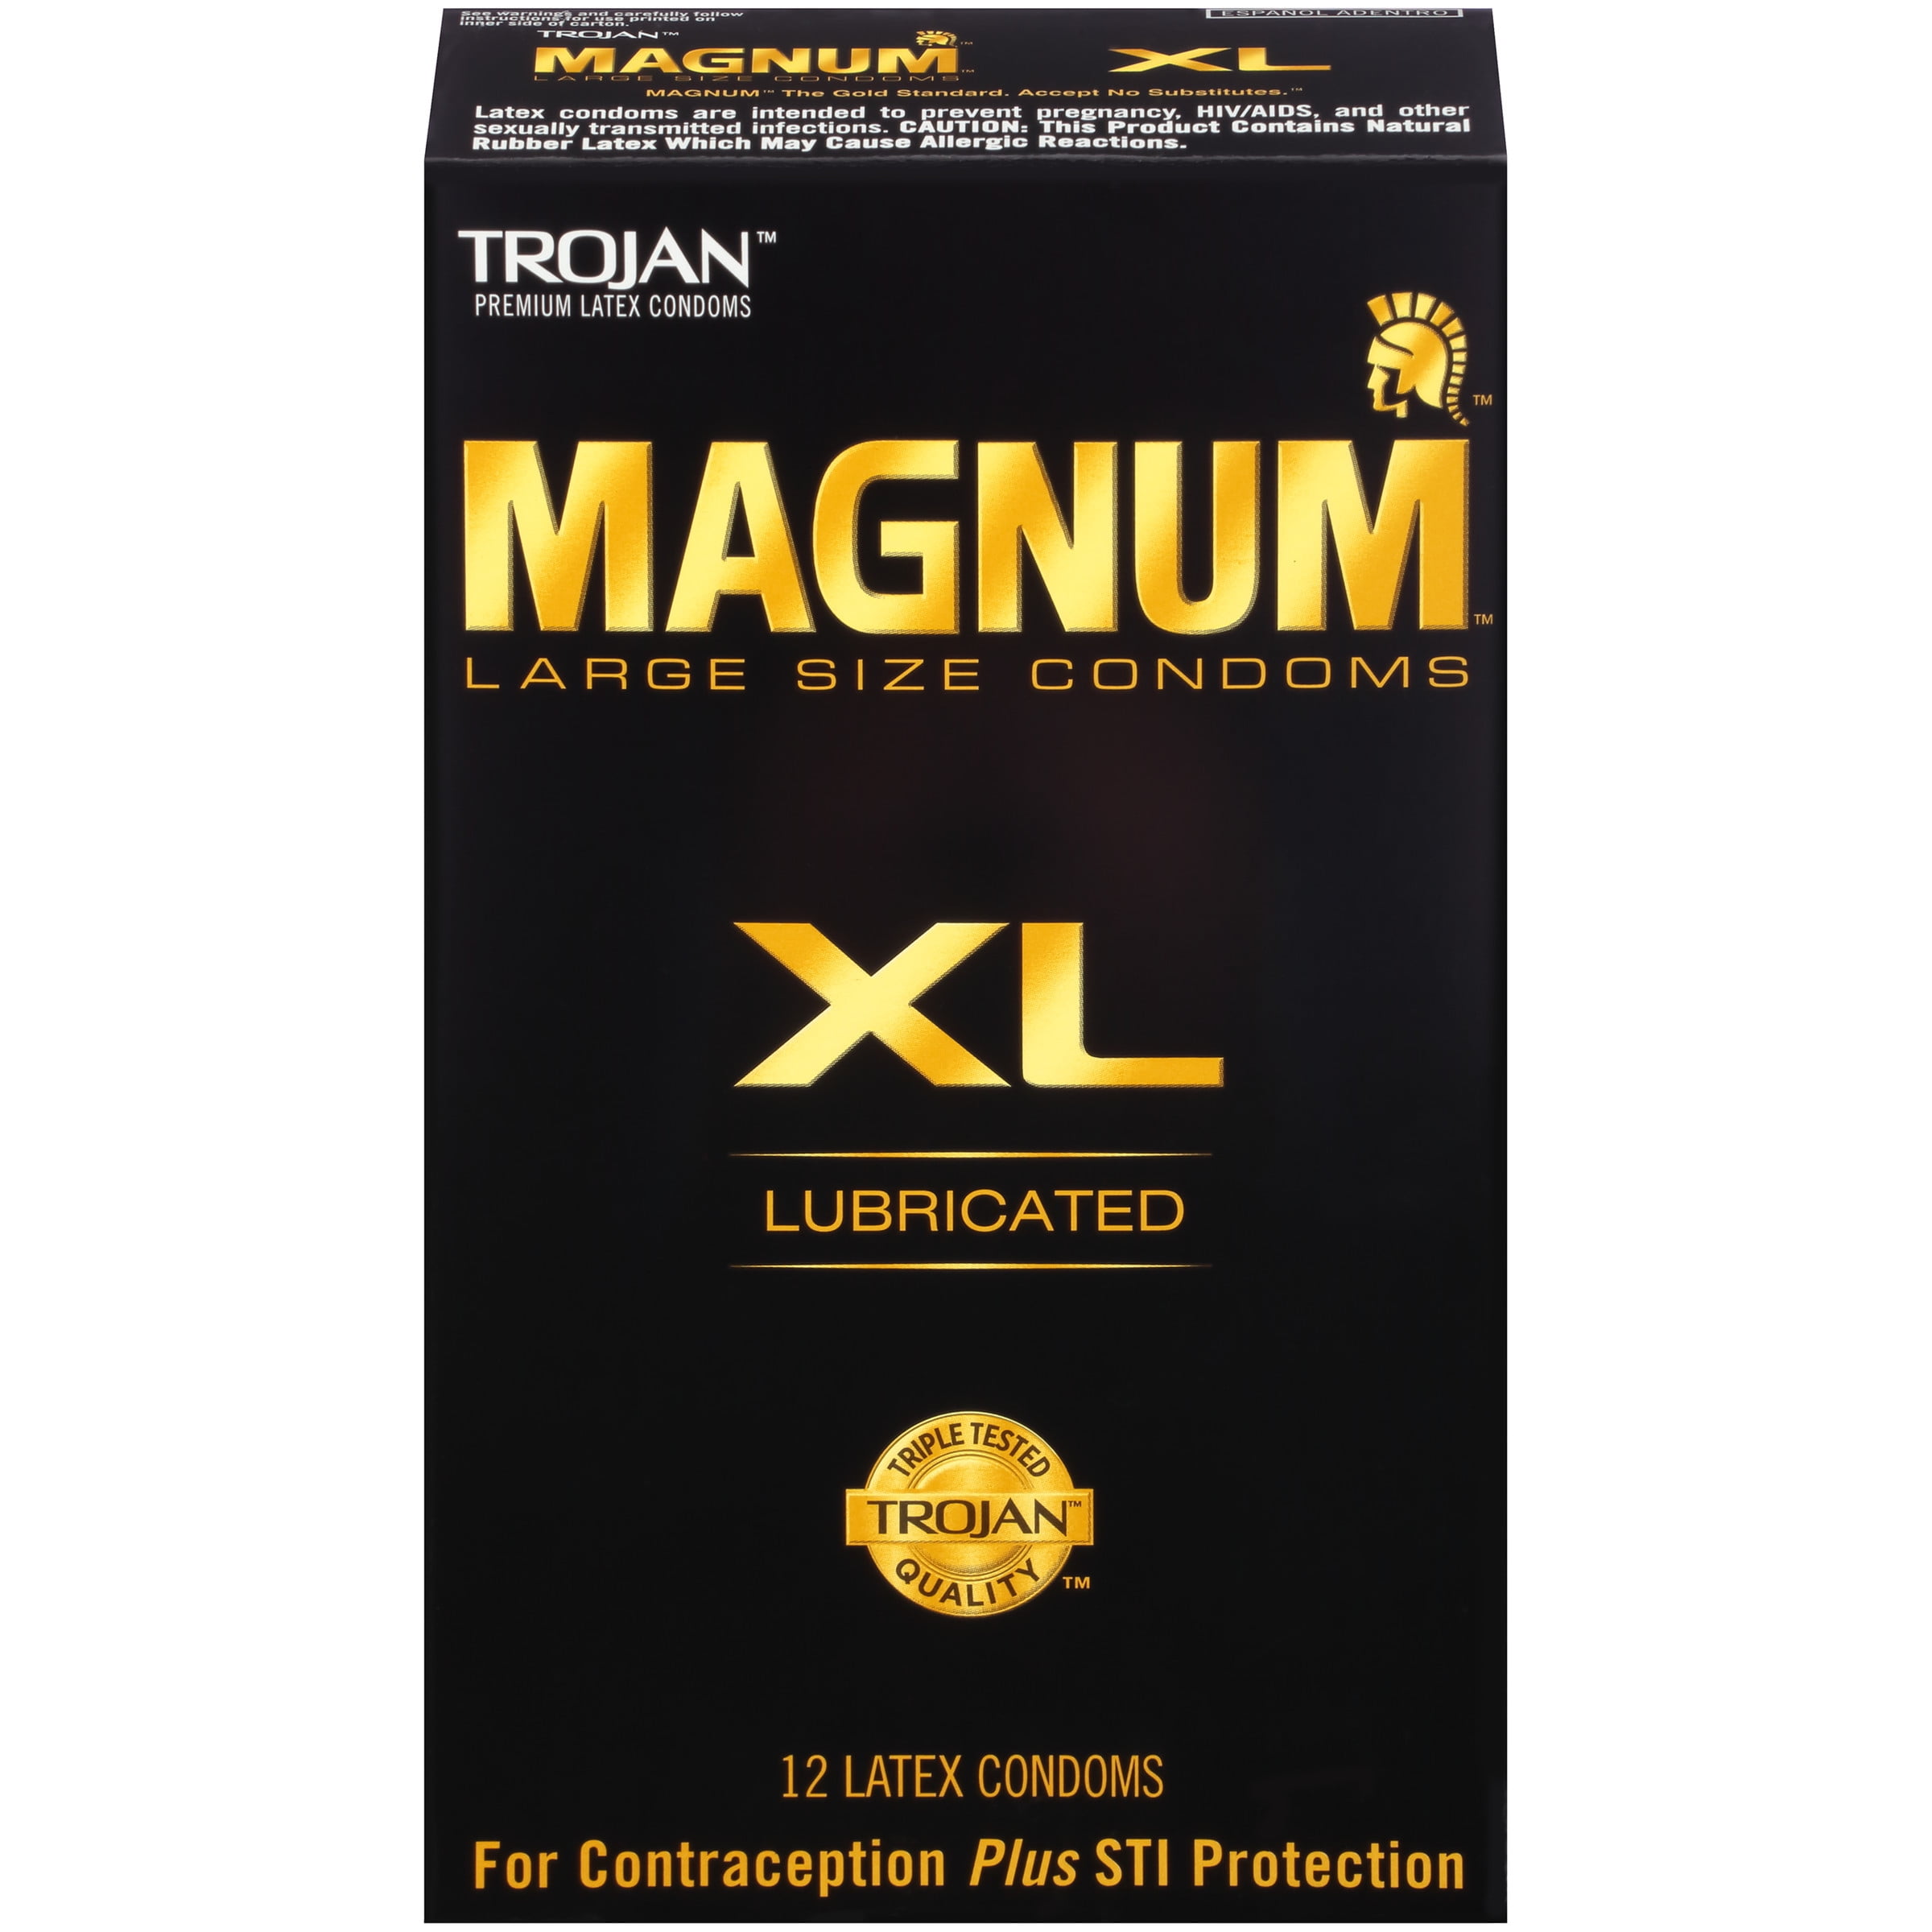 Trojan Magnum XL Large Size Lubricated Condoms - 12 Count. 